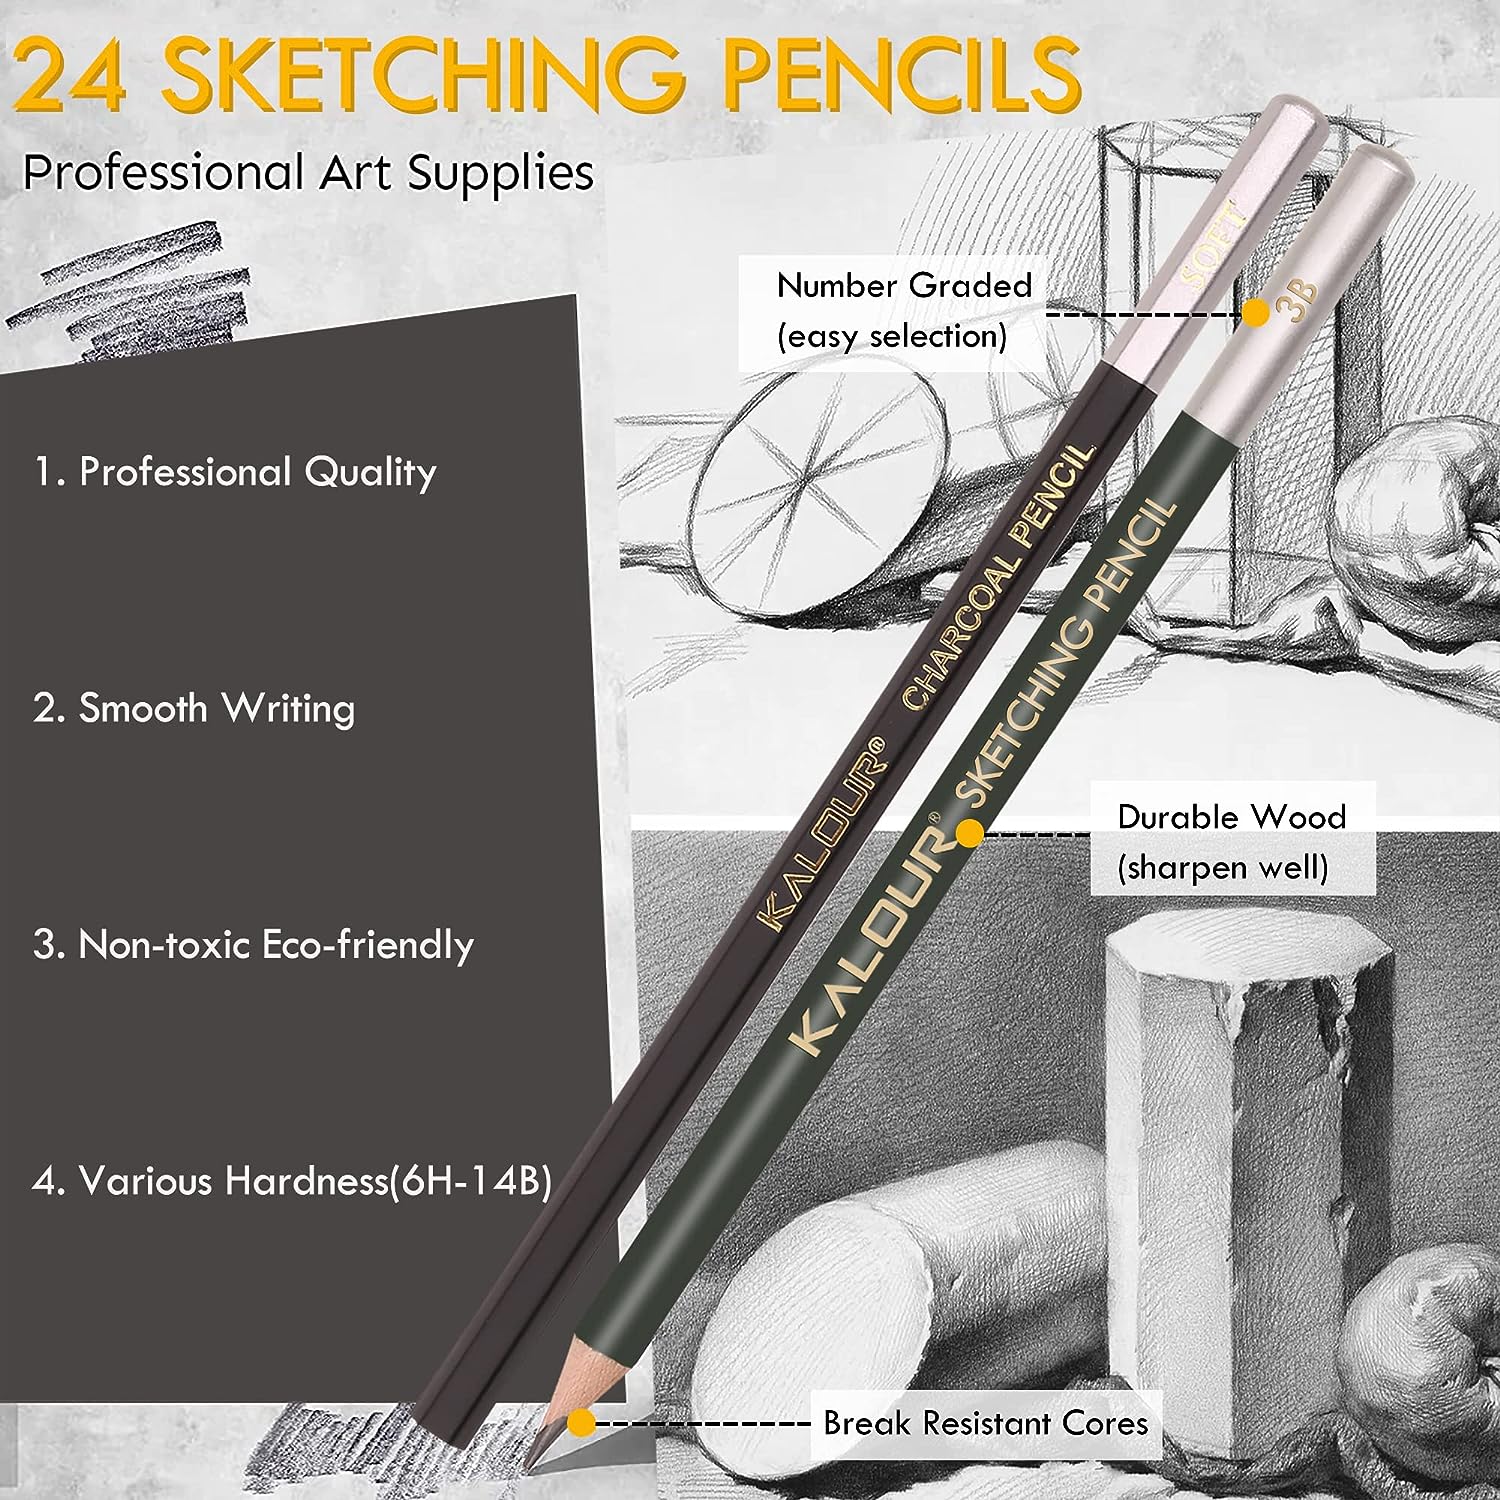 76 Drawing Sketching Kit Set - Pro Art Supplies with Sketchbook